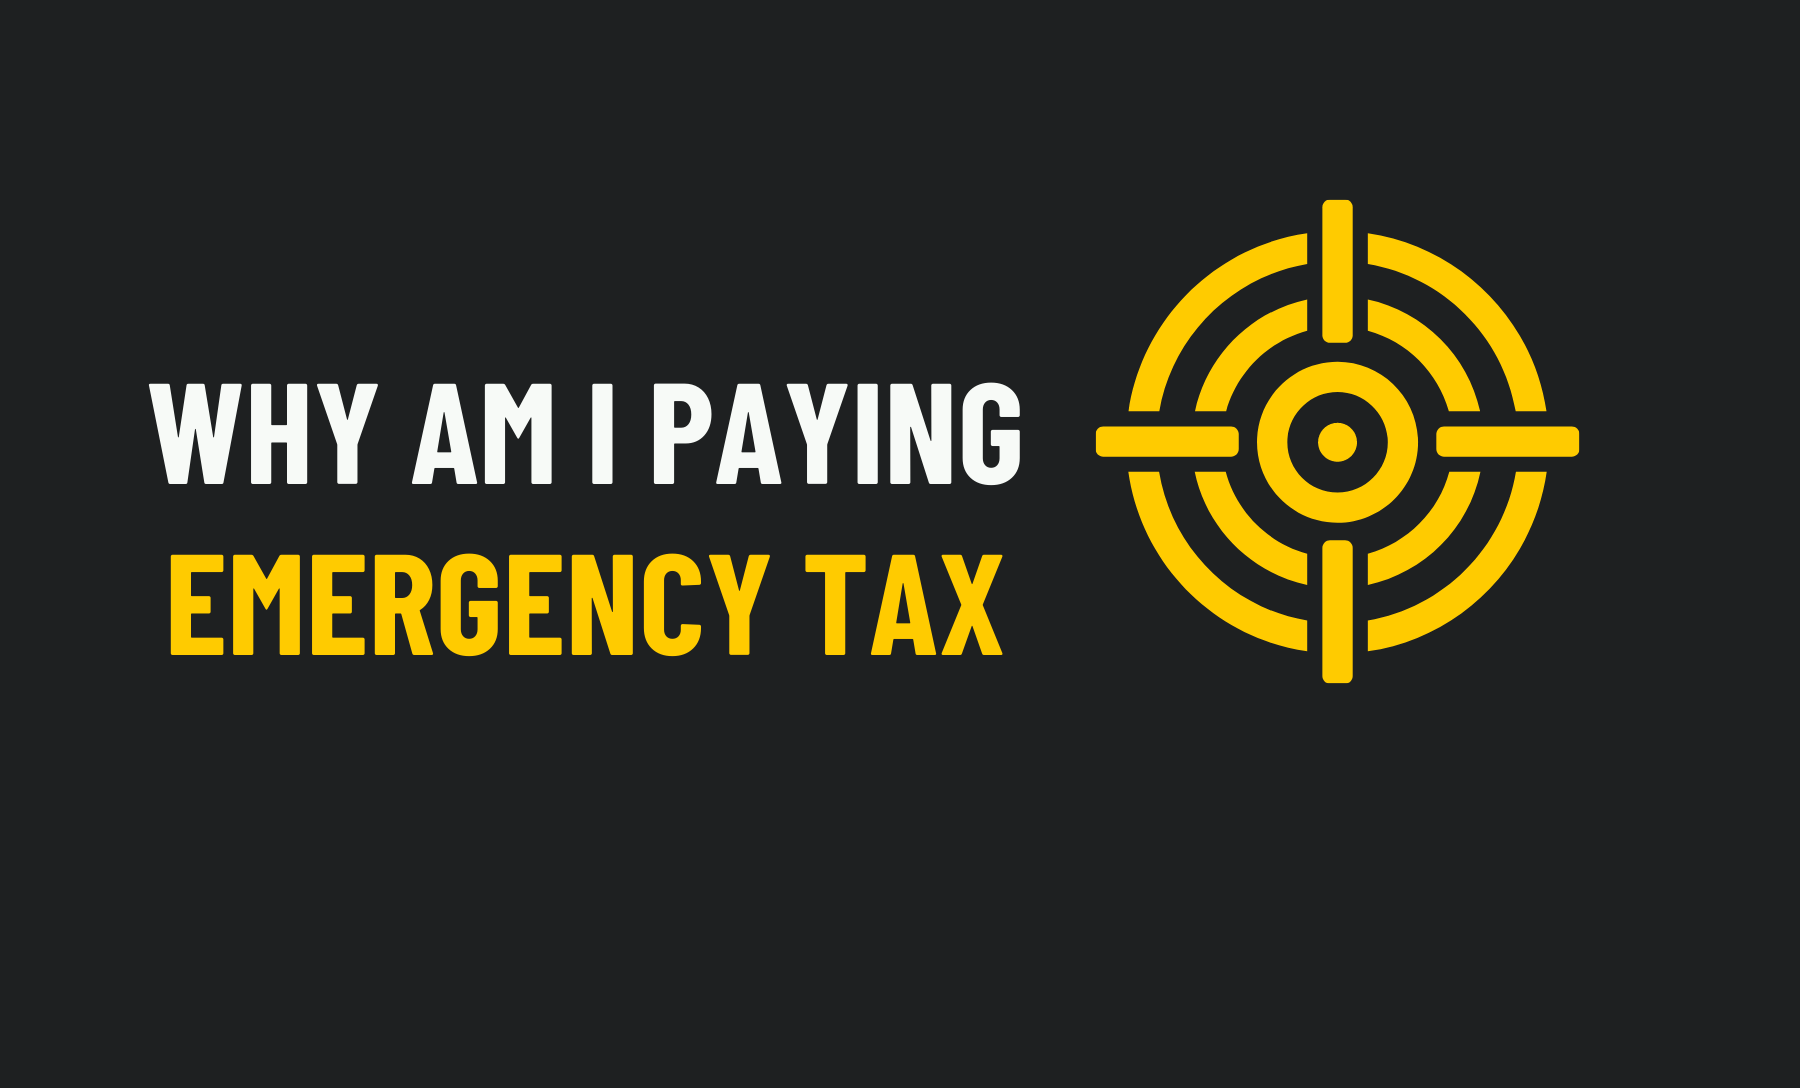 Paying Emergency Tax